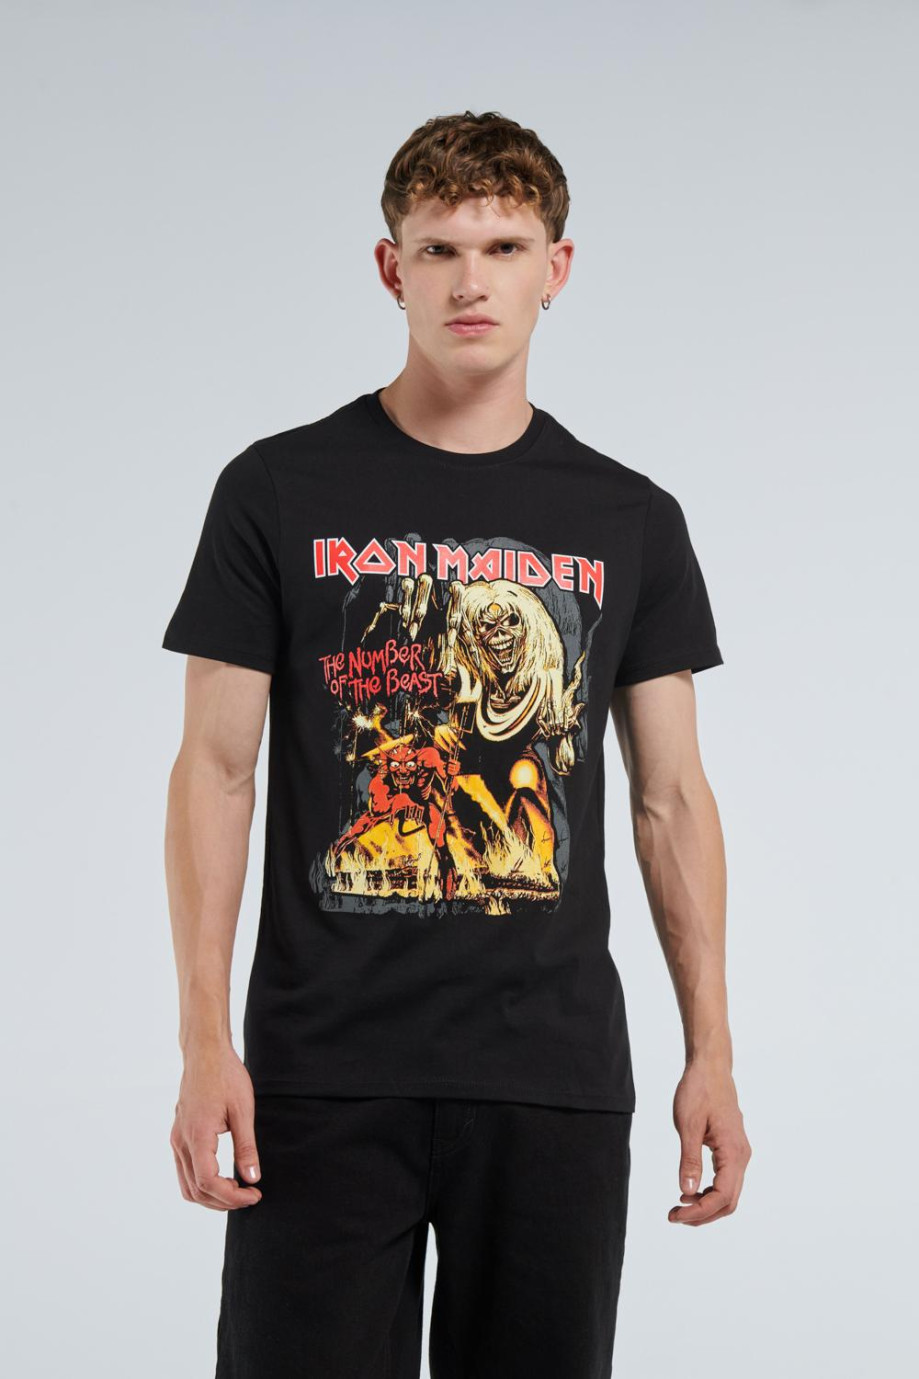 Camiseta negra con manga corta y diseño de Iron Maiden en frente